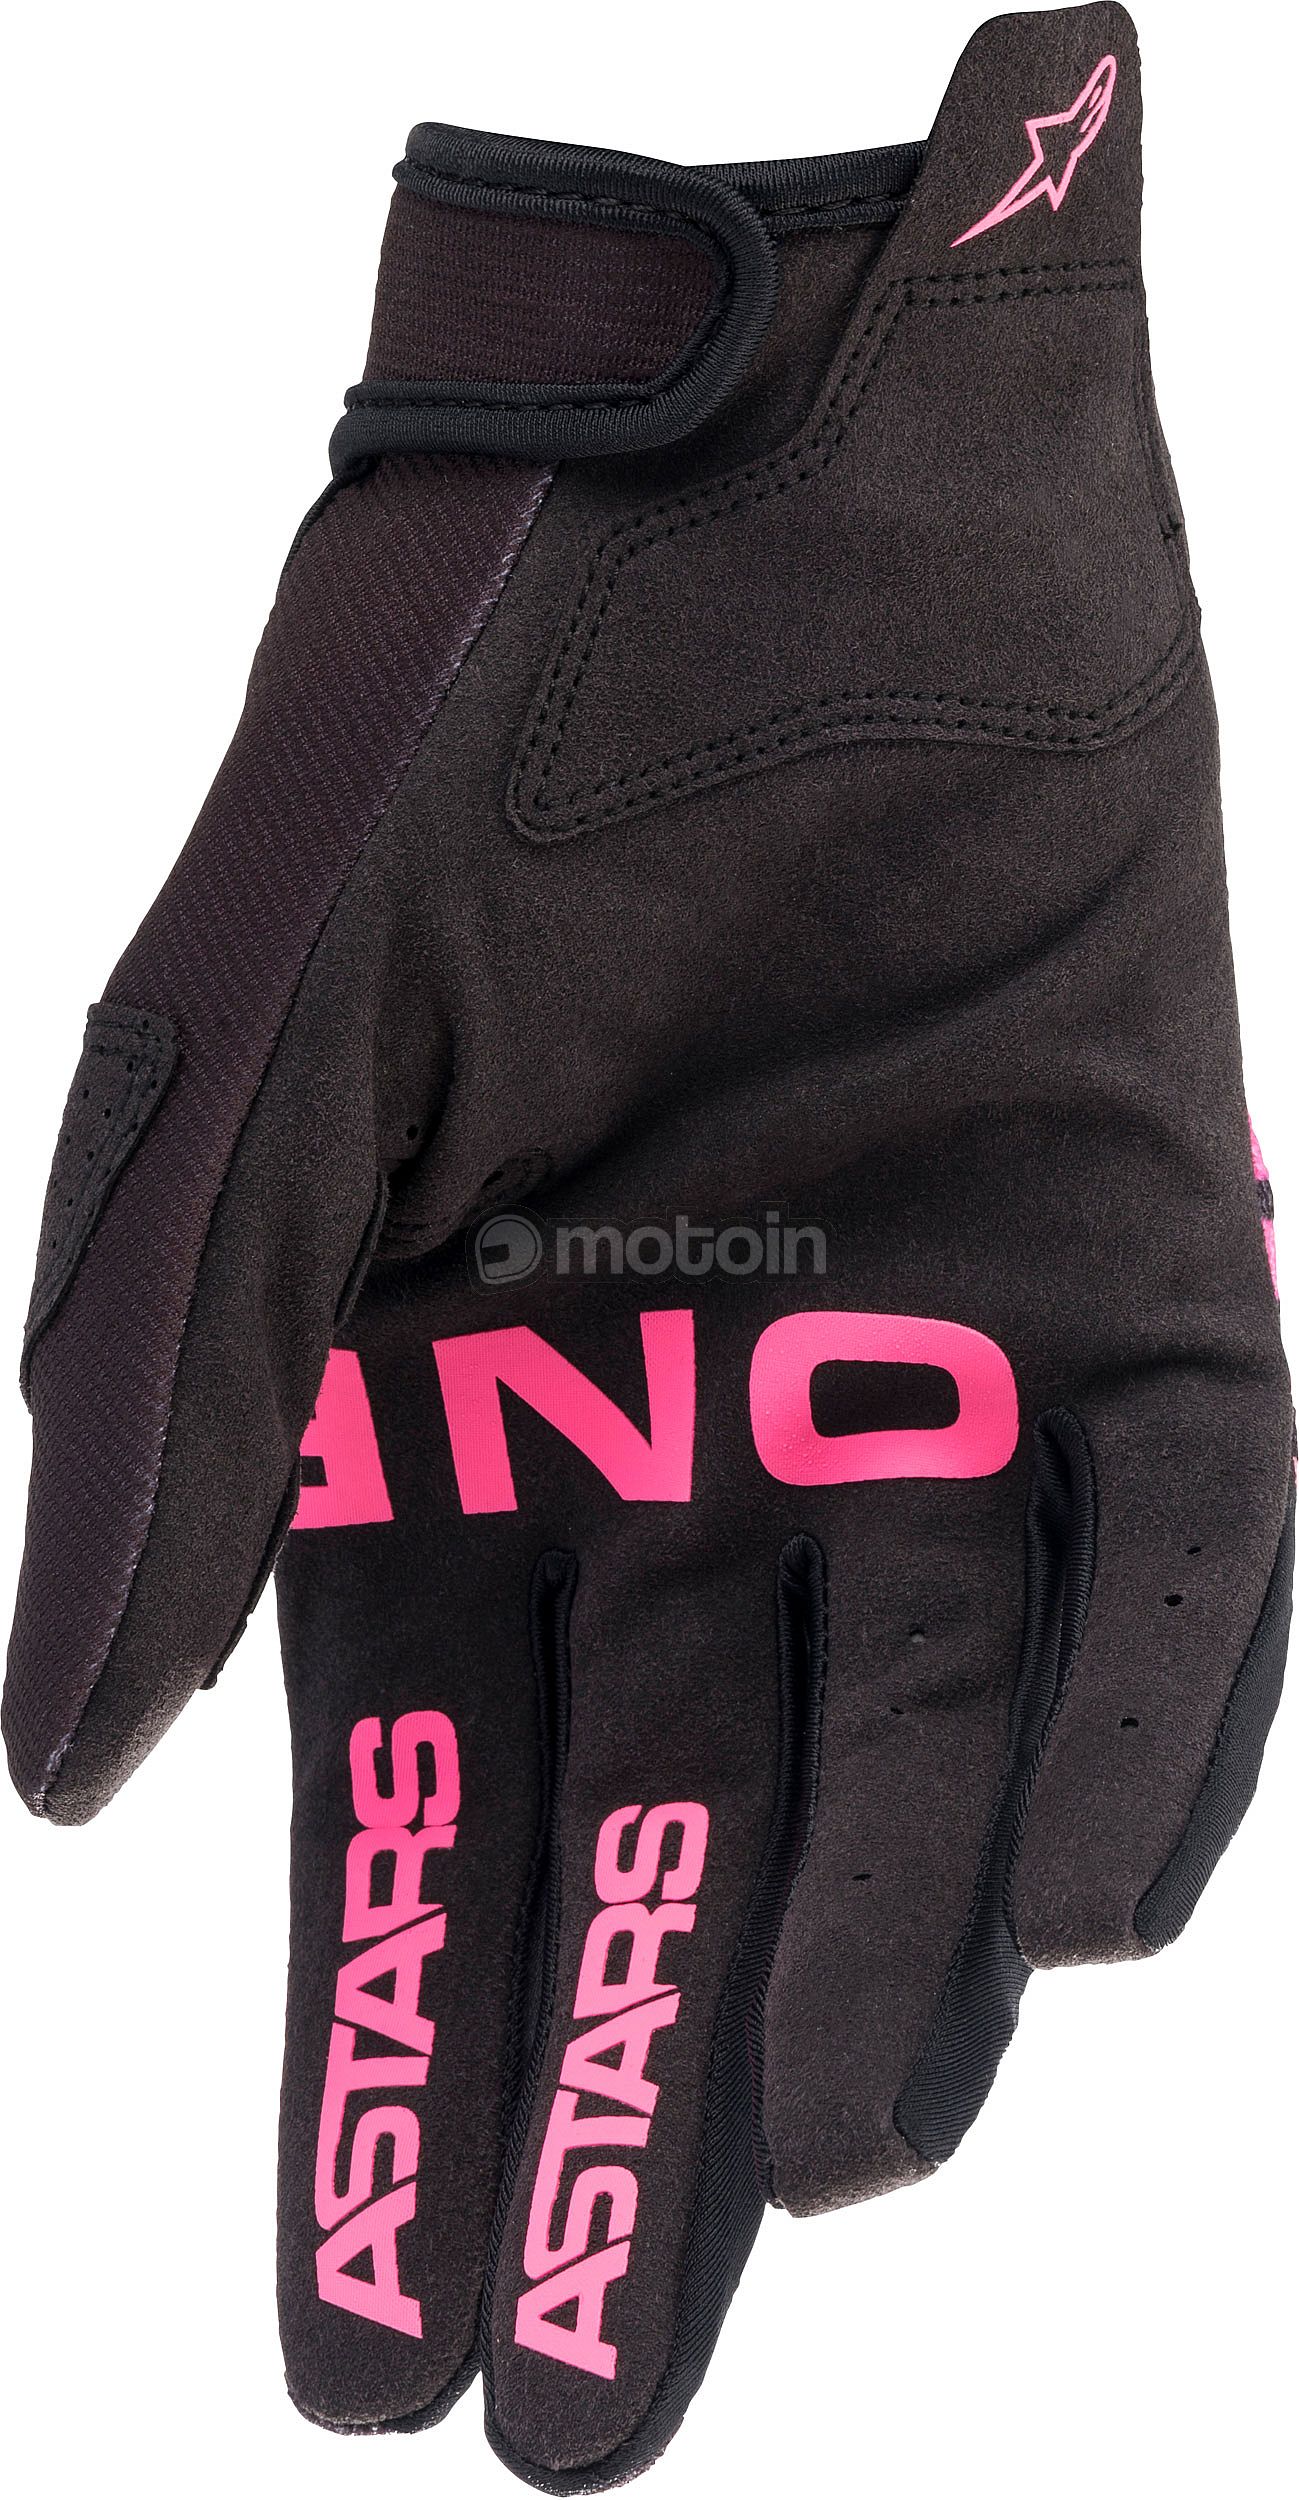 Alpinestars Handschuhe Radar Dark Navy/Pink Fluo